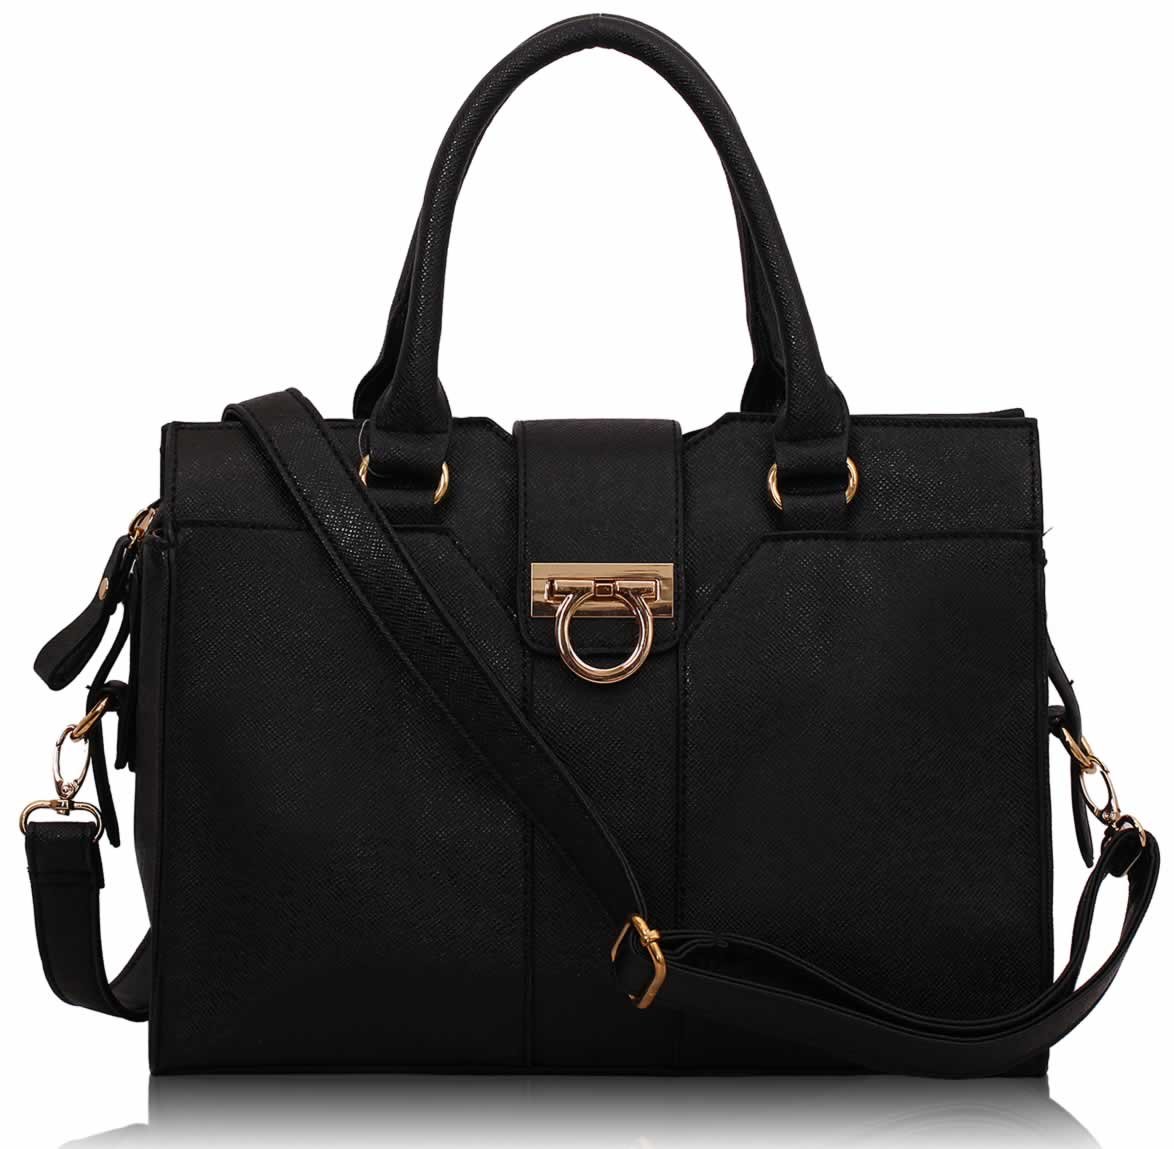 Wholesale Black FashionTote Handbag